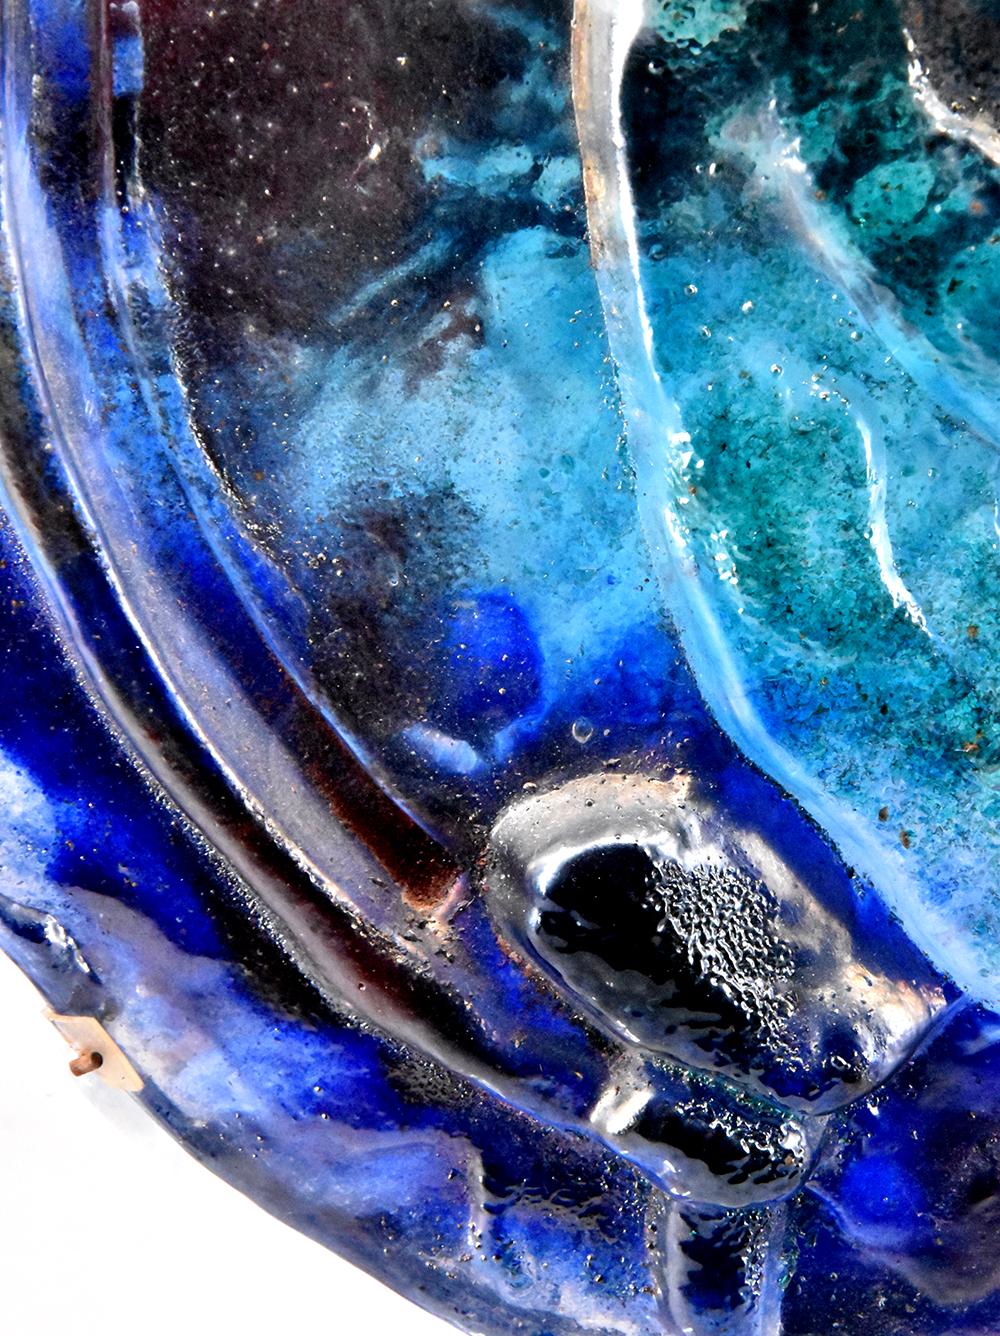 chagall glass